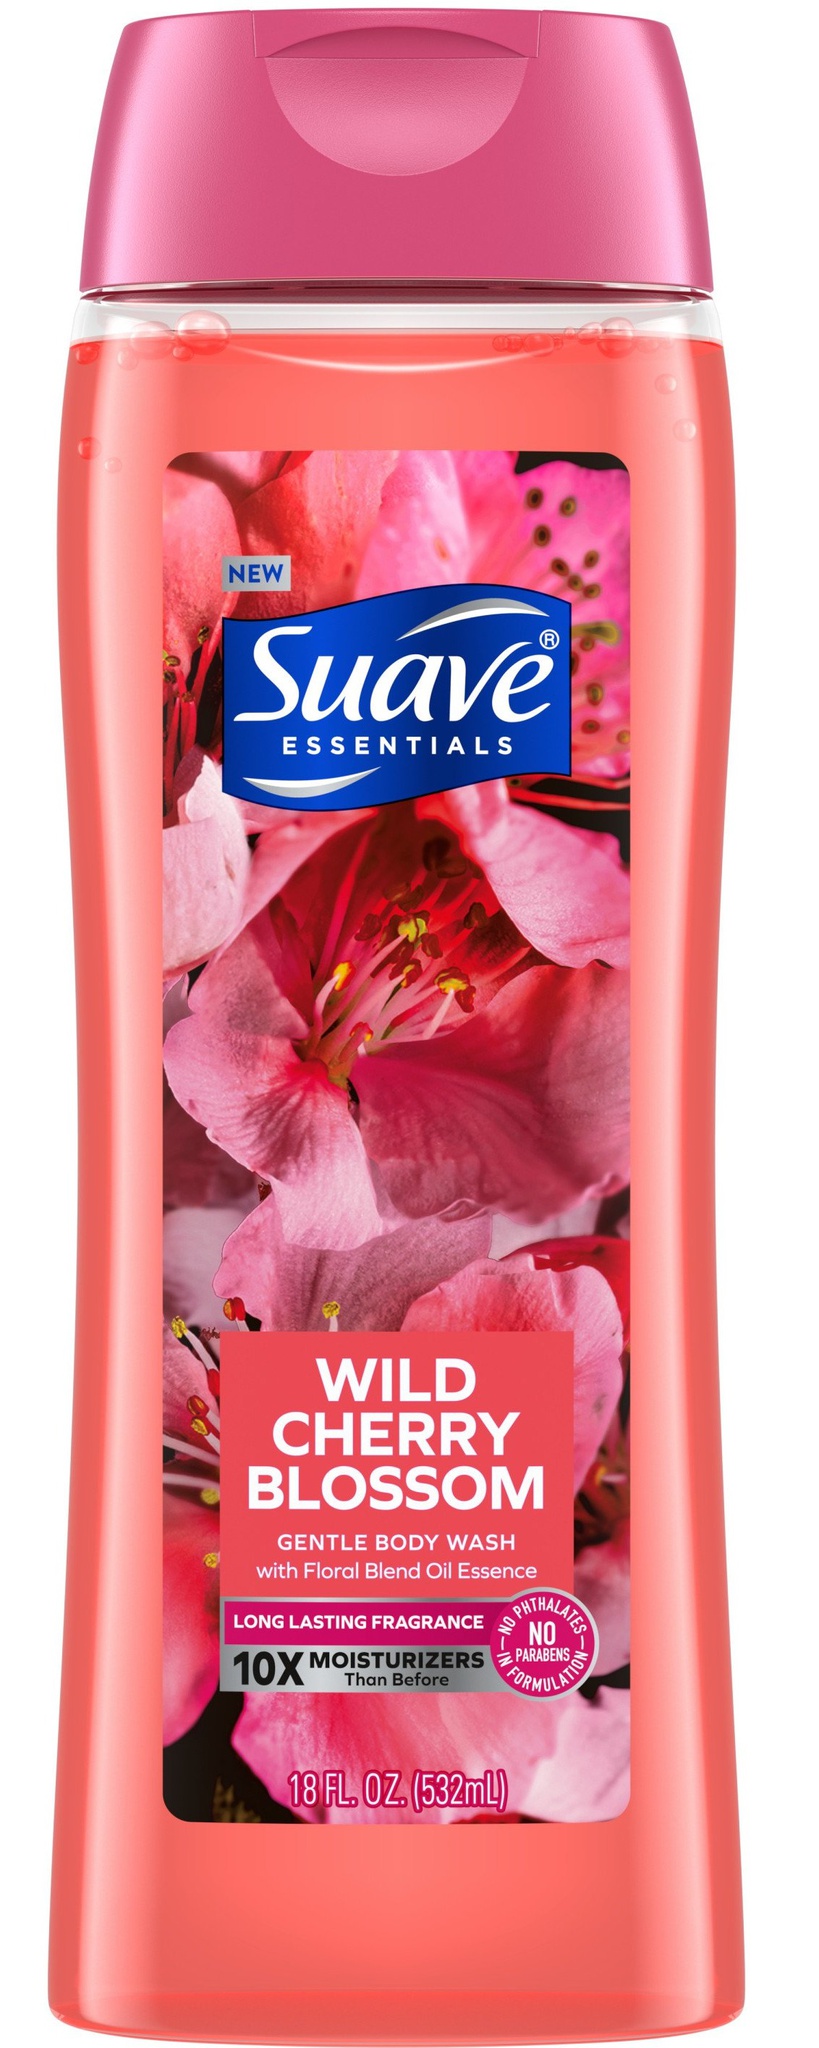 Suave Essential Wild Cherry Blossom Gentle Body Wash